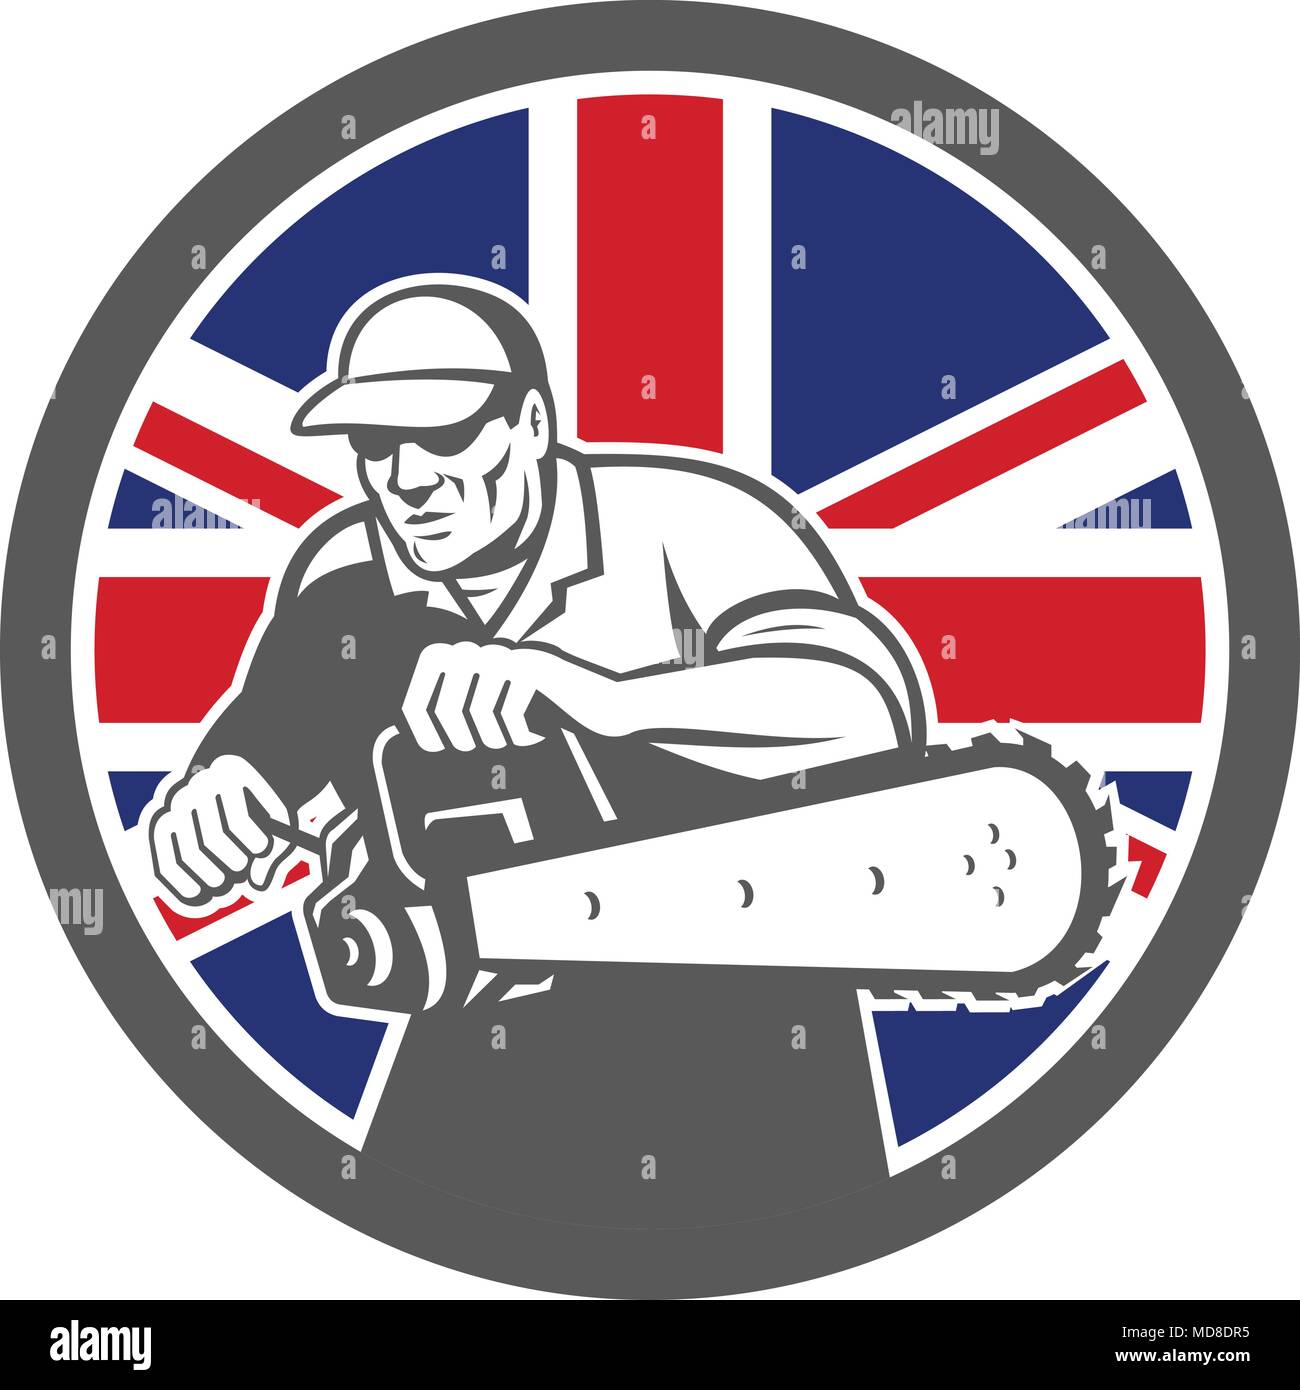 Icon retro style illustration of a British arborist, tree surgeon or lumberjack holding a chainsaw with United Kingdom UK, Great Britain Union Jack fl Stock Vector